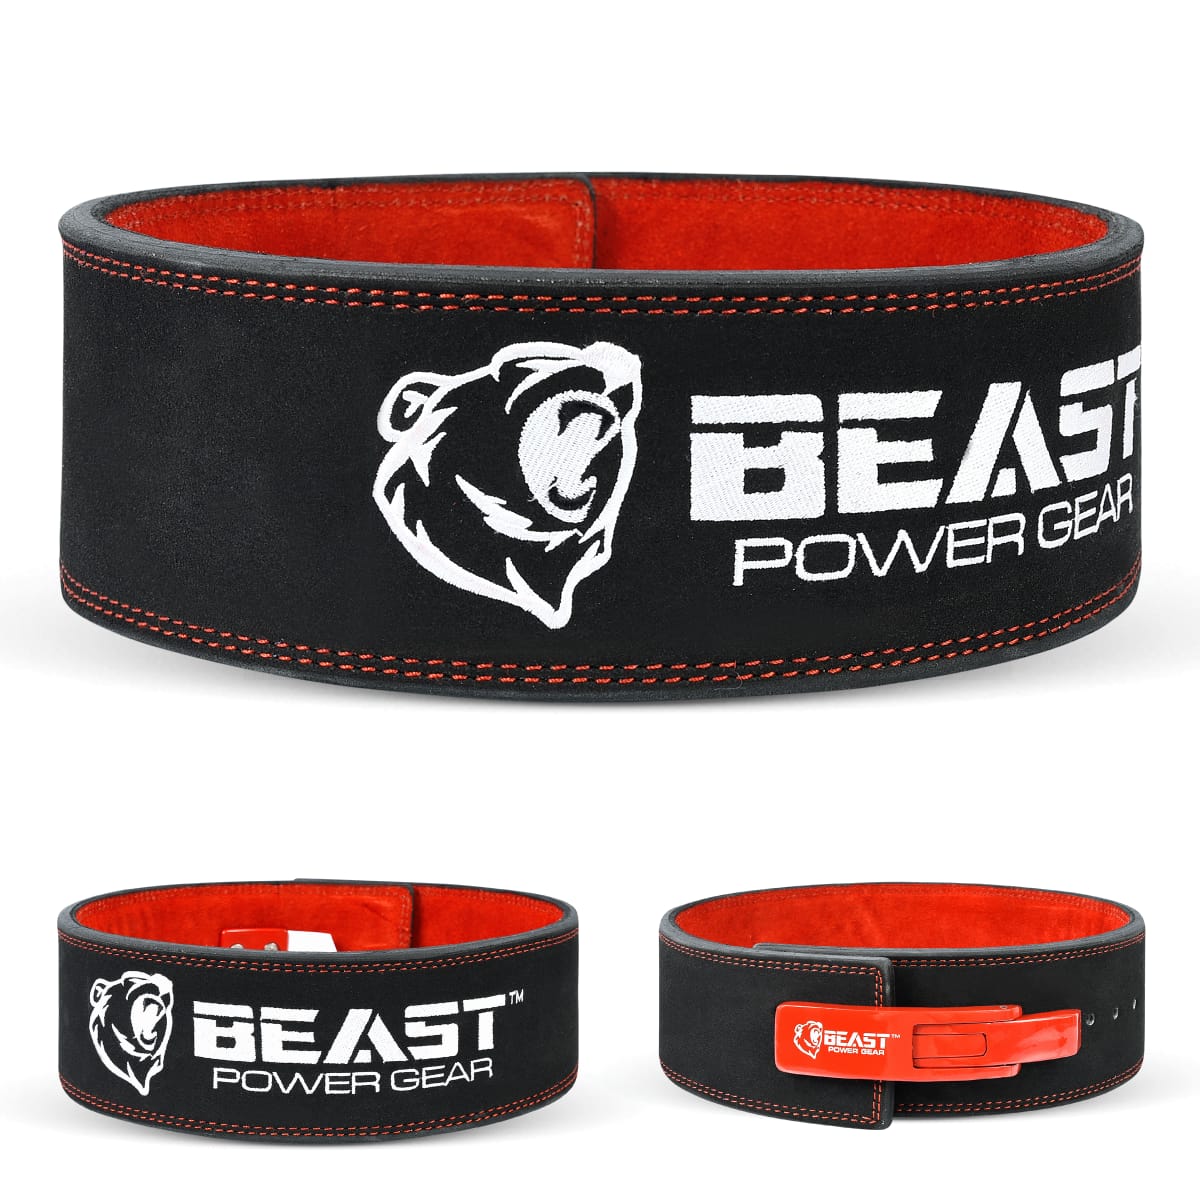 Beastpowergear Weight Lifting Belt 4 with Free Wrist Wrap  Genuine  Leather Weightlifting Belt for Men Women 